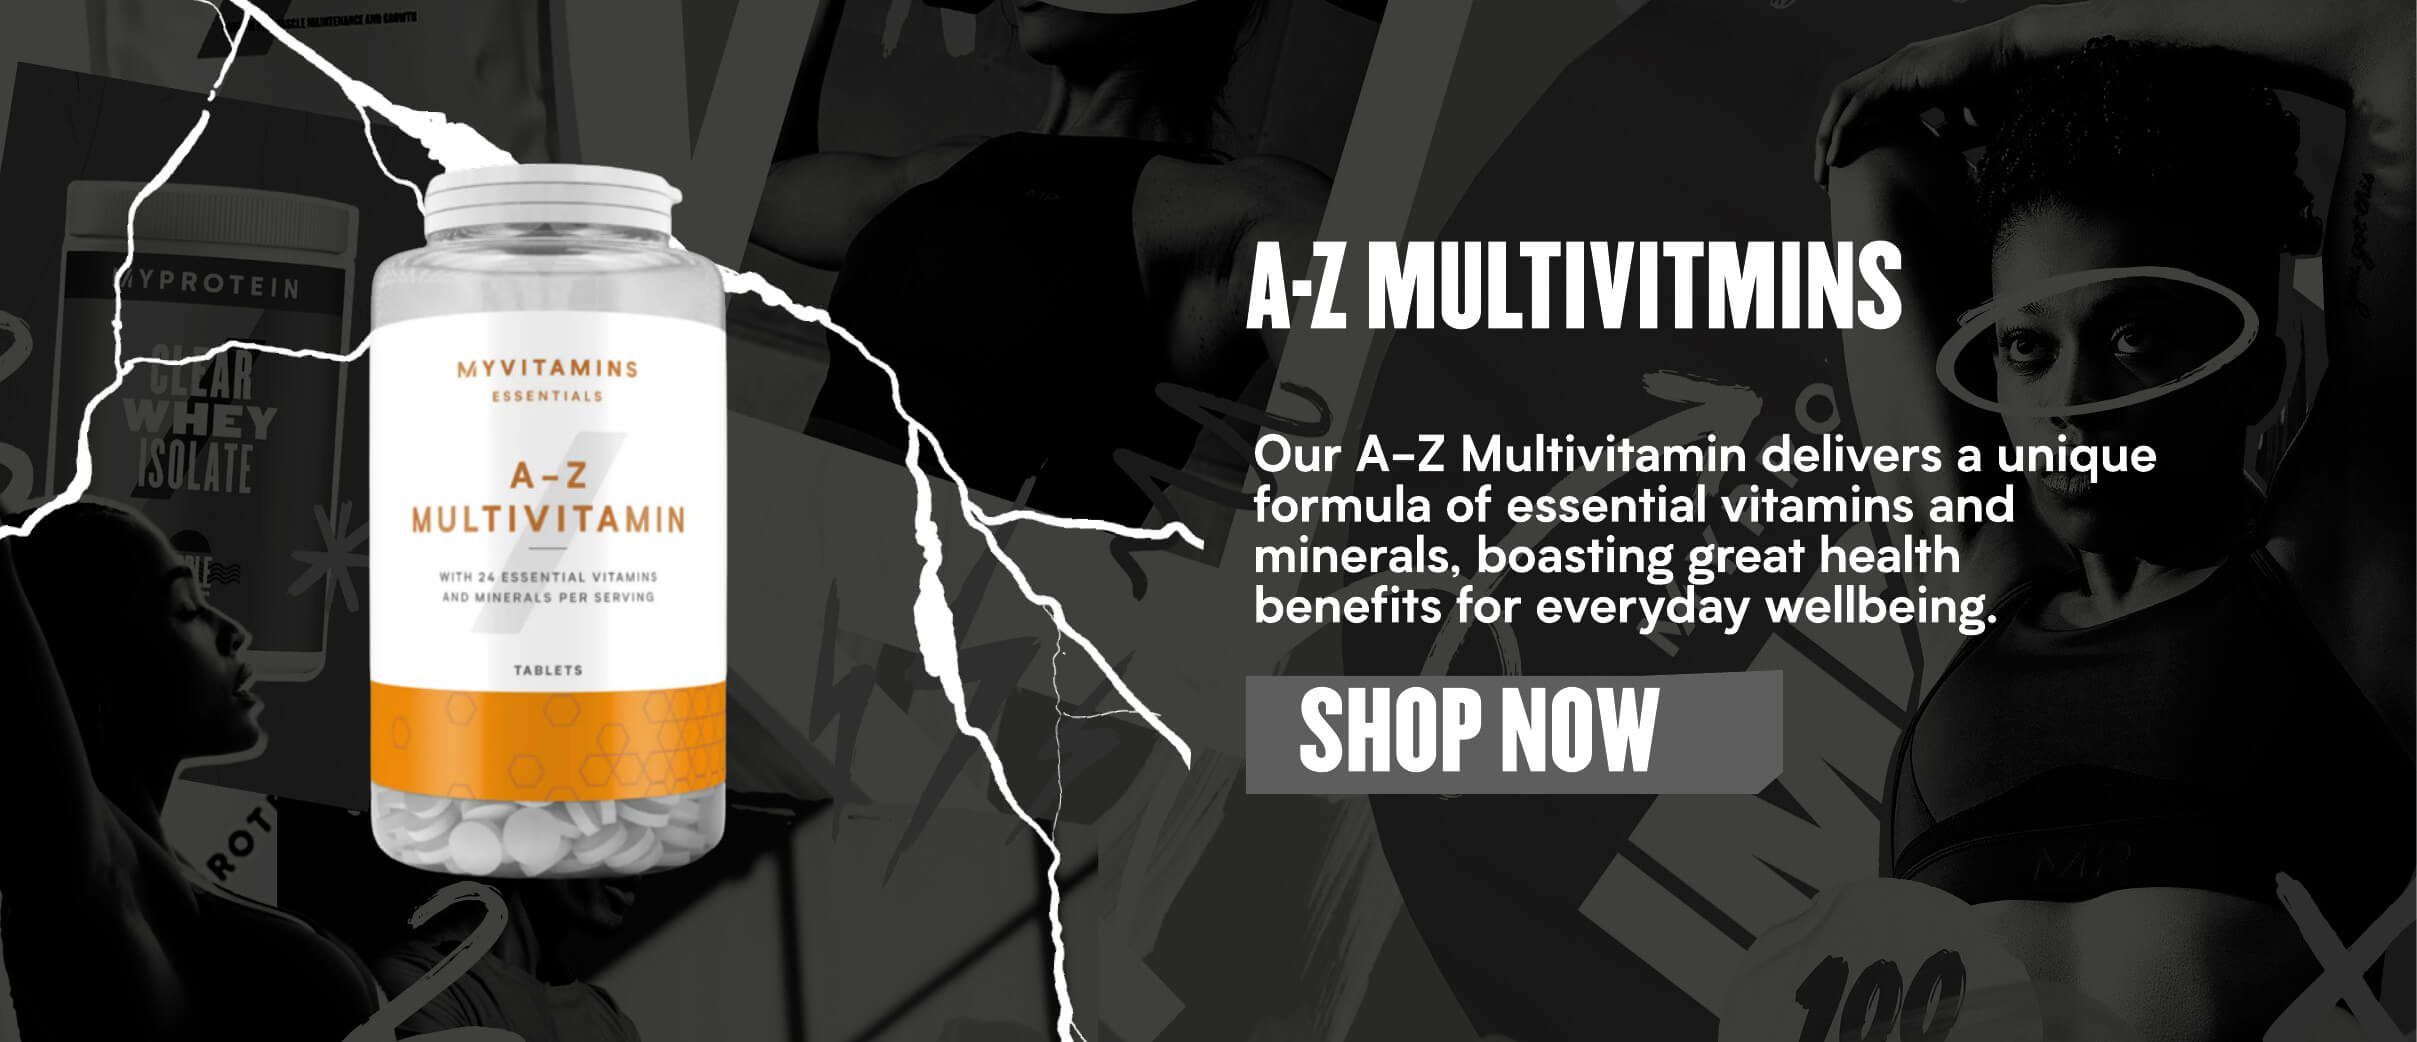 Multivitamins A-Z